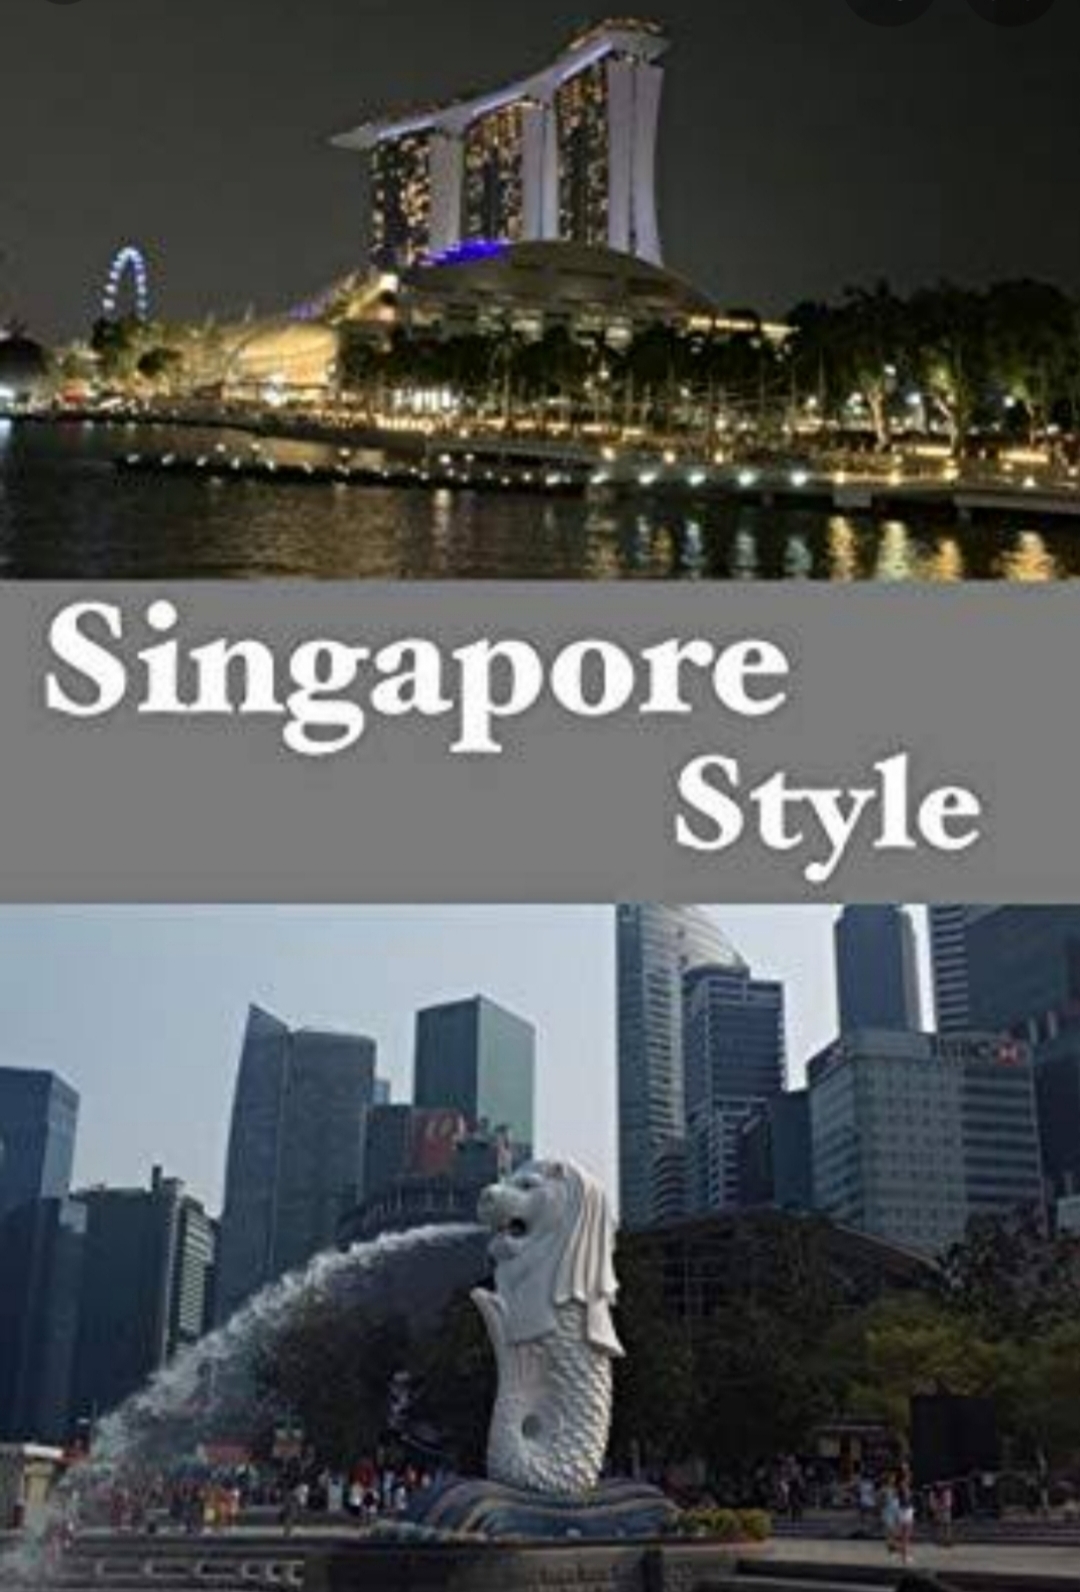 सिंगापुर देश's image